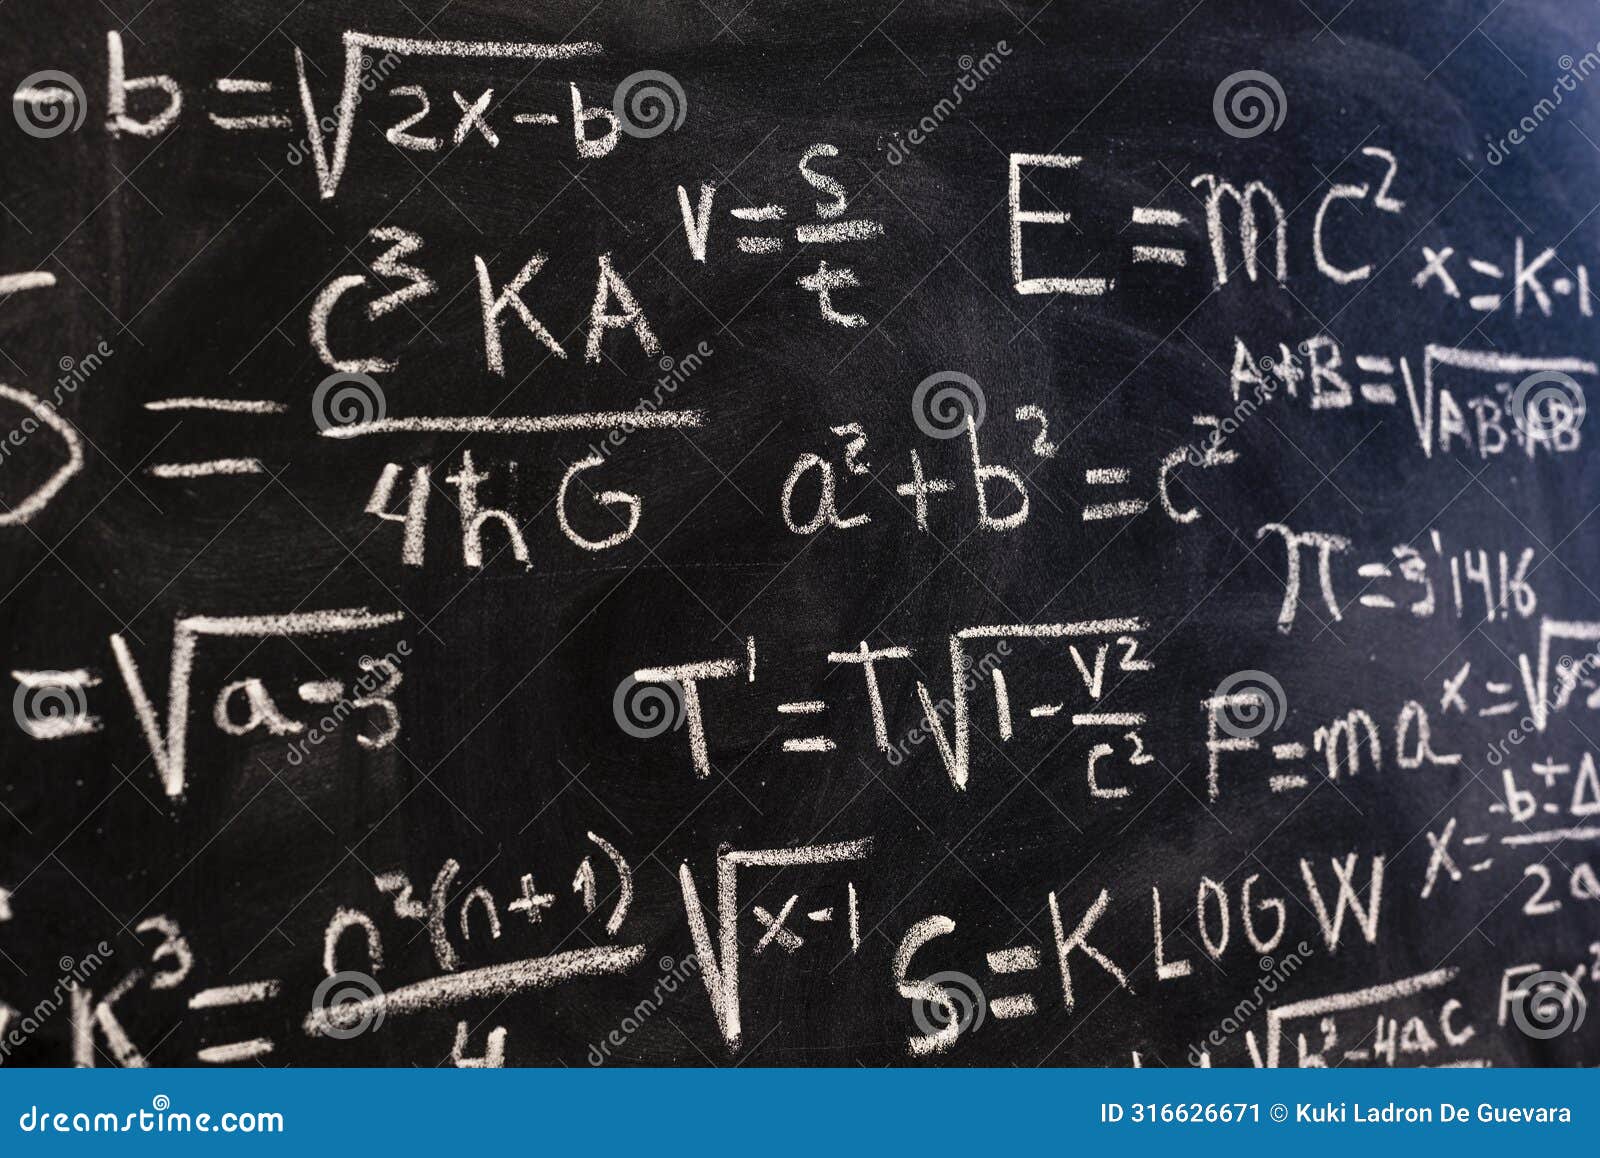 mathematical equations and physics formulas handwritten on blackboard